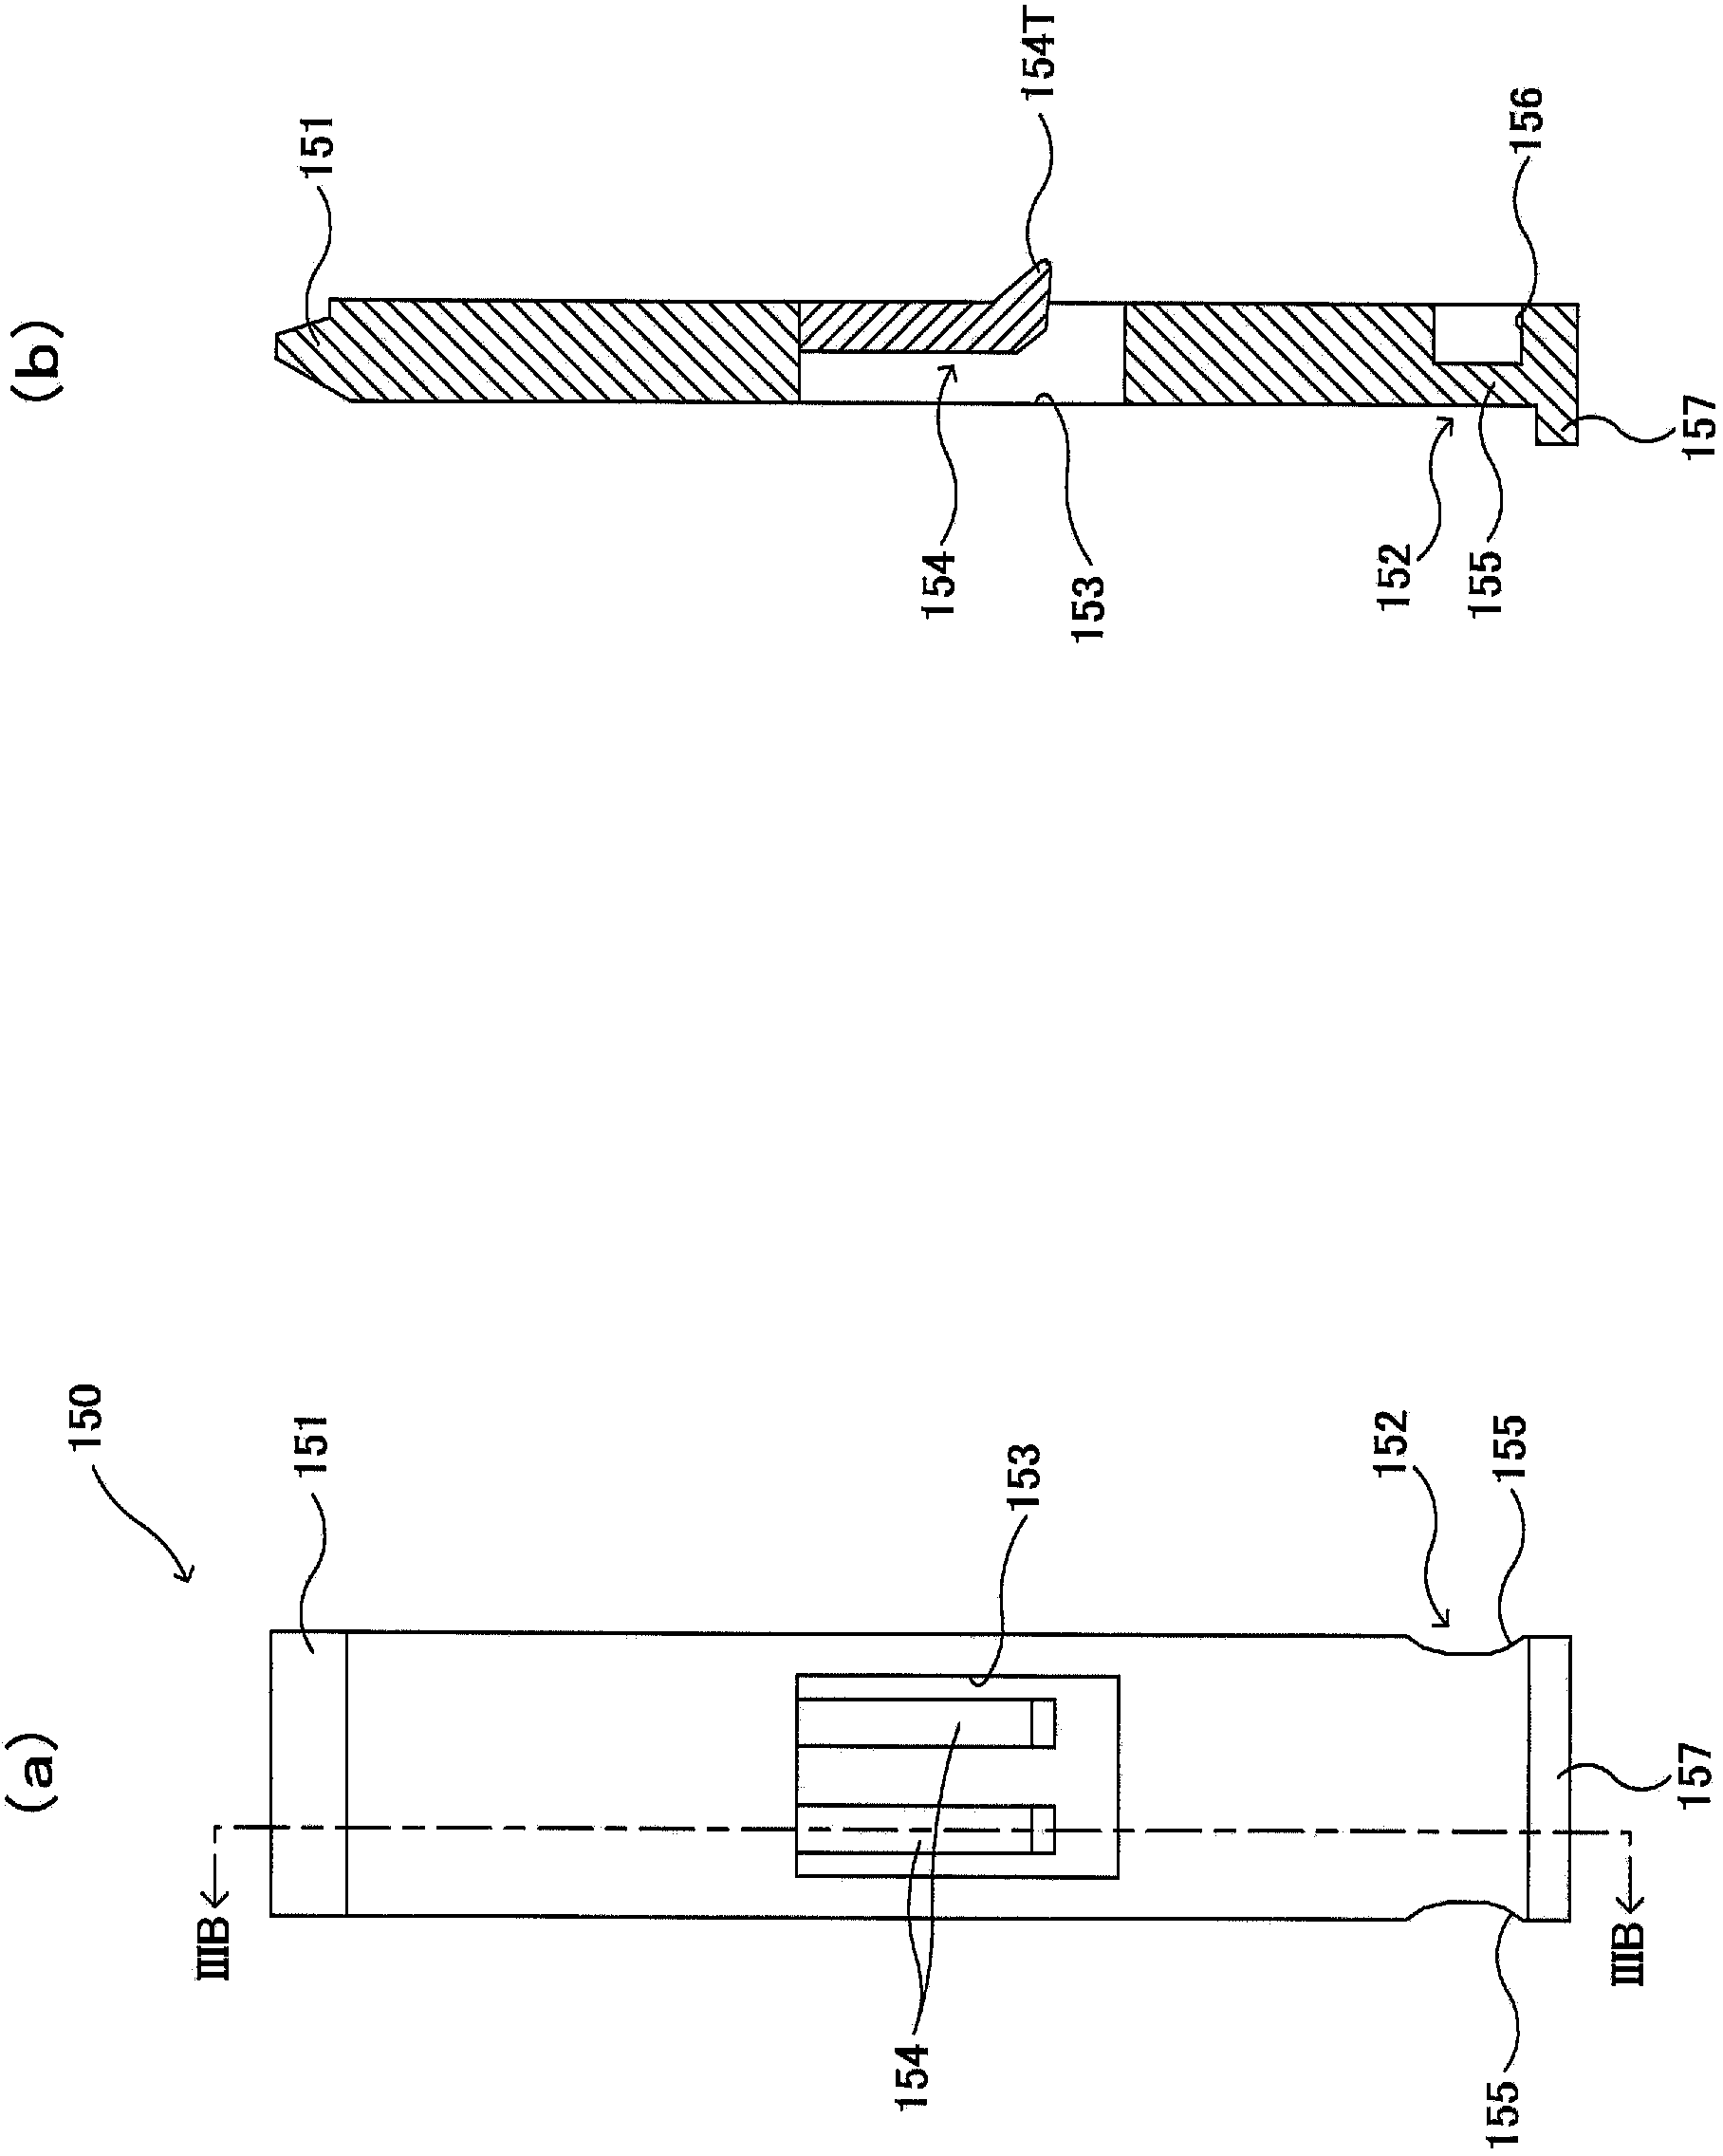 DIN-rail mount type device